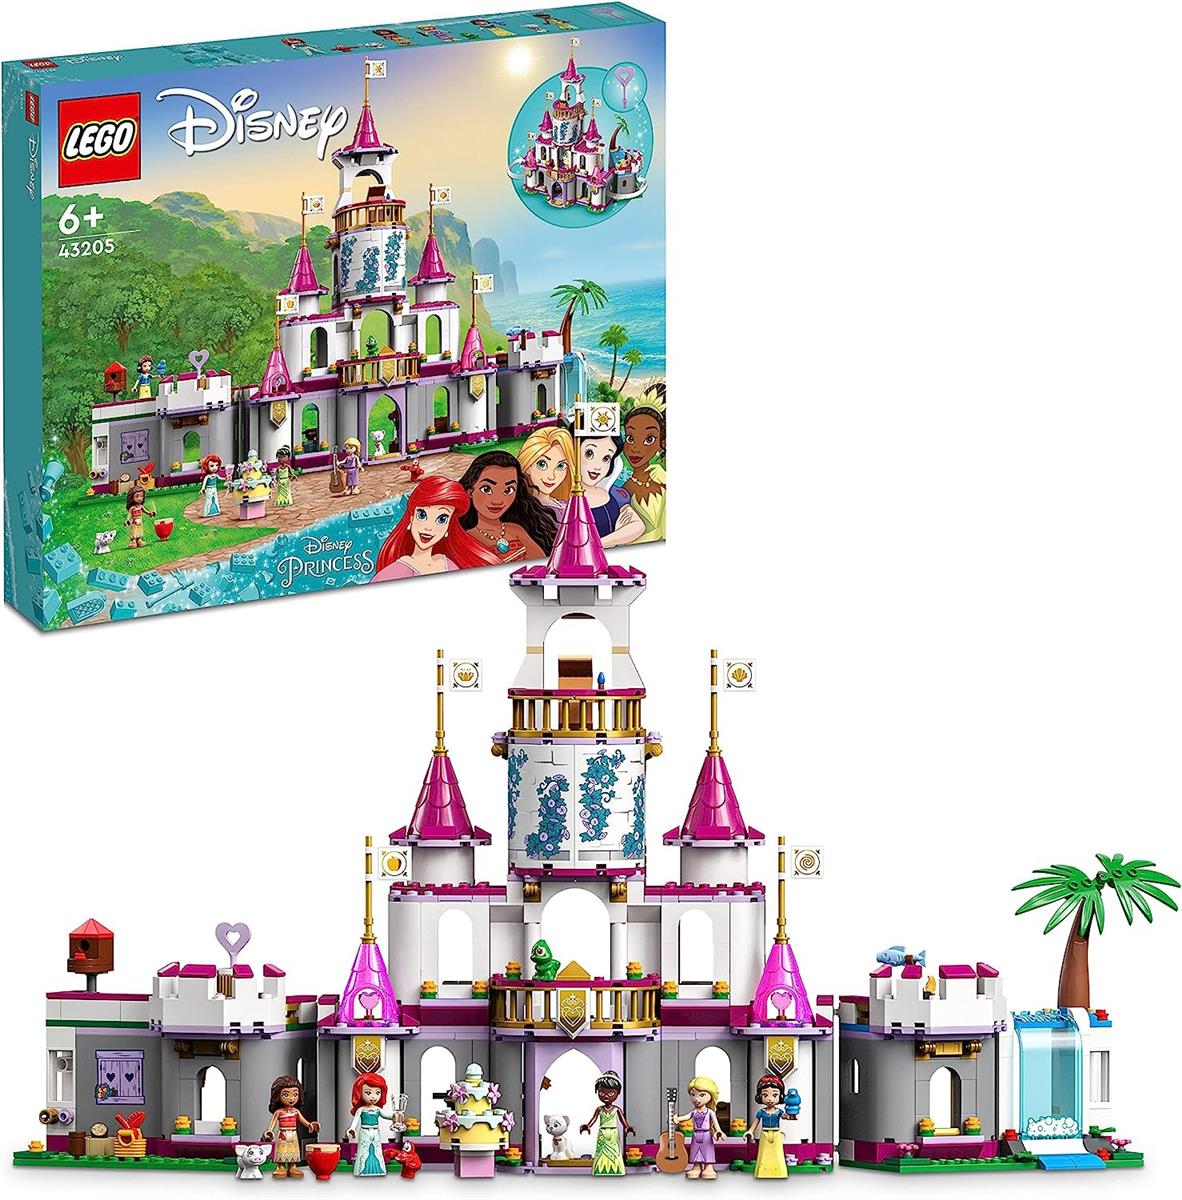 LEGO 43205 Disney Princess Ultimatives Abenteuerschloss Prinzessinnen-Schloss-Spielzeug Haus mit Mini-Puppen Ariel Vaiana Tiana LEGO-Sets LEGO-Steine Bausteine Sets